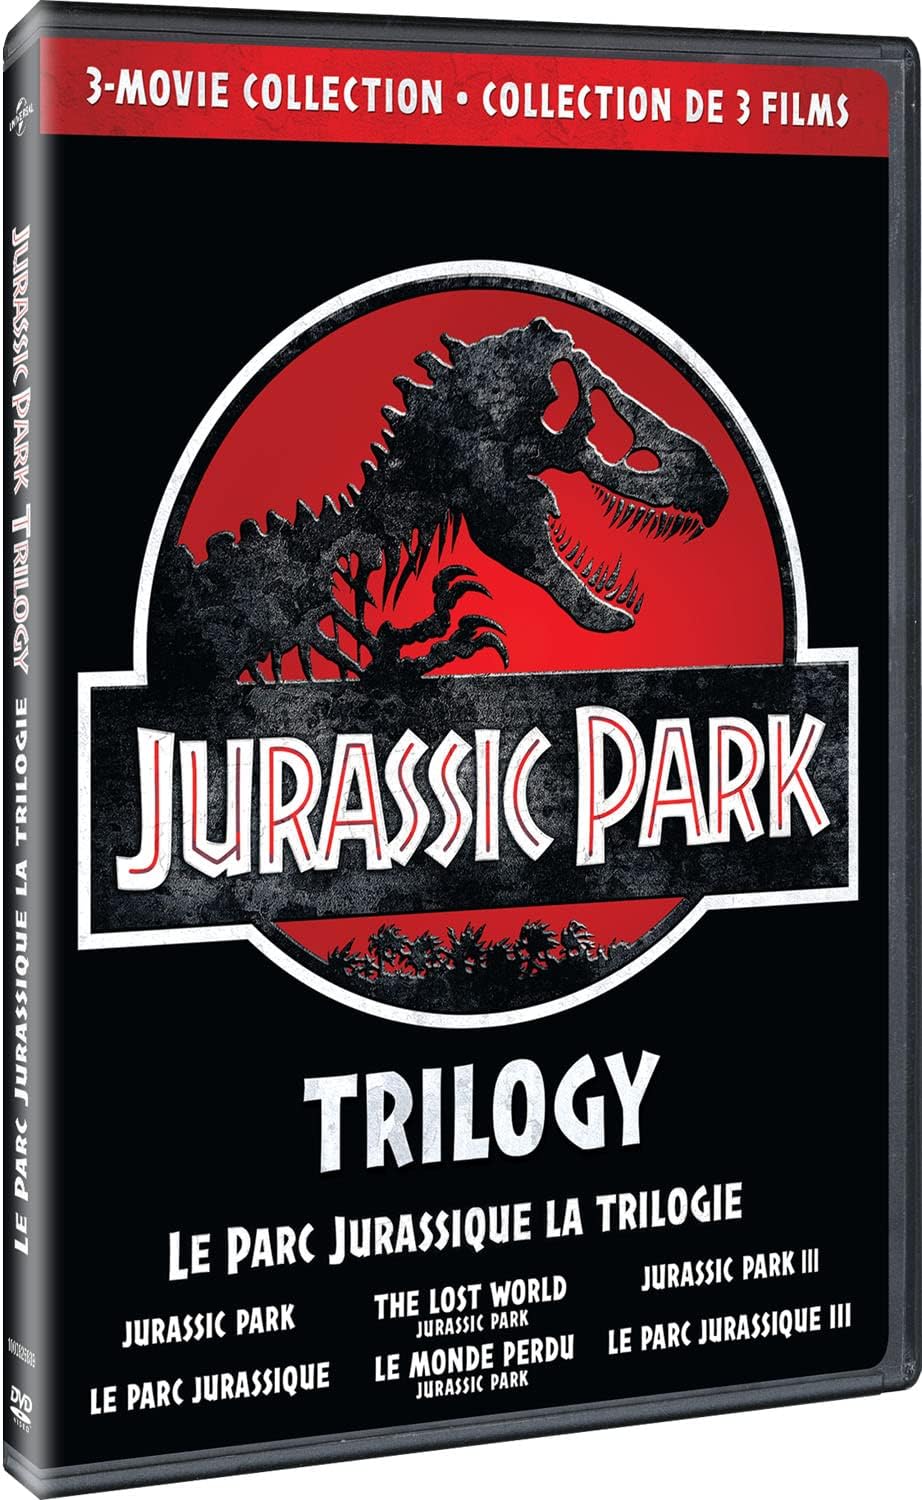 Jurassic Park Trilogy (Jurassic Park / The Lost World: Jurassic Park / Jurassic Park III) [DVD]